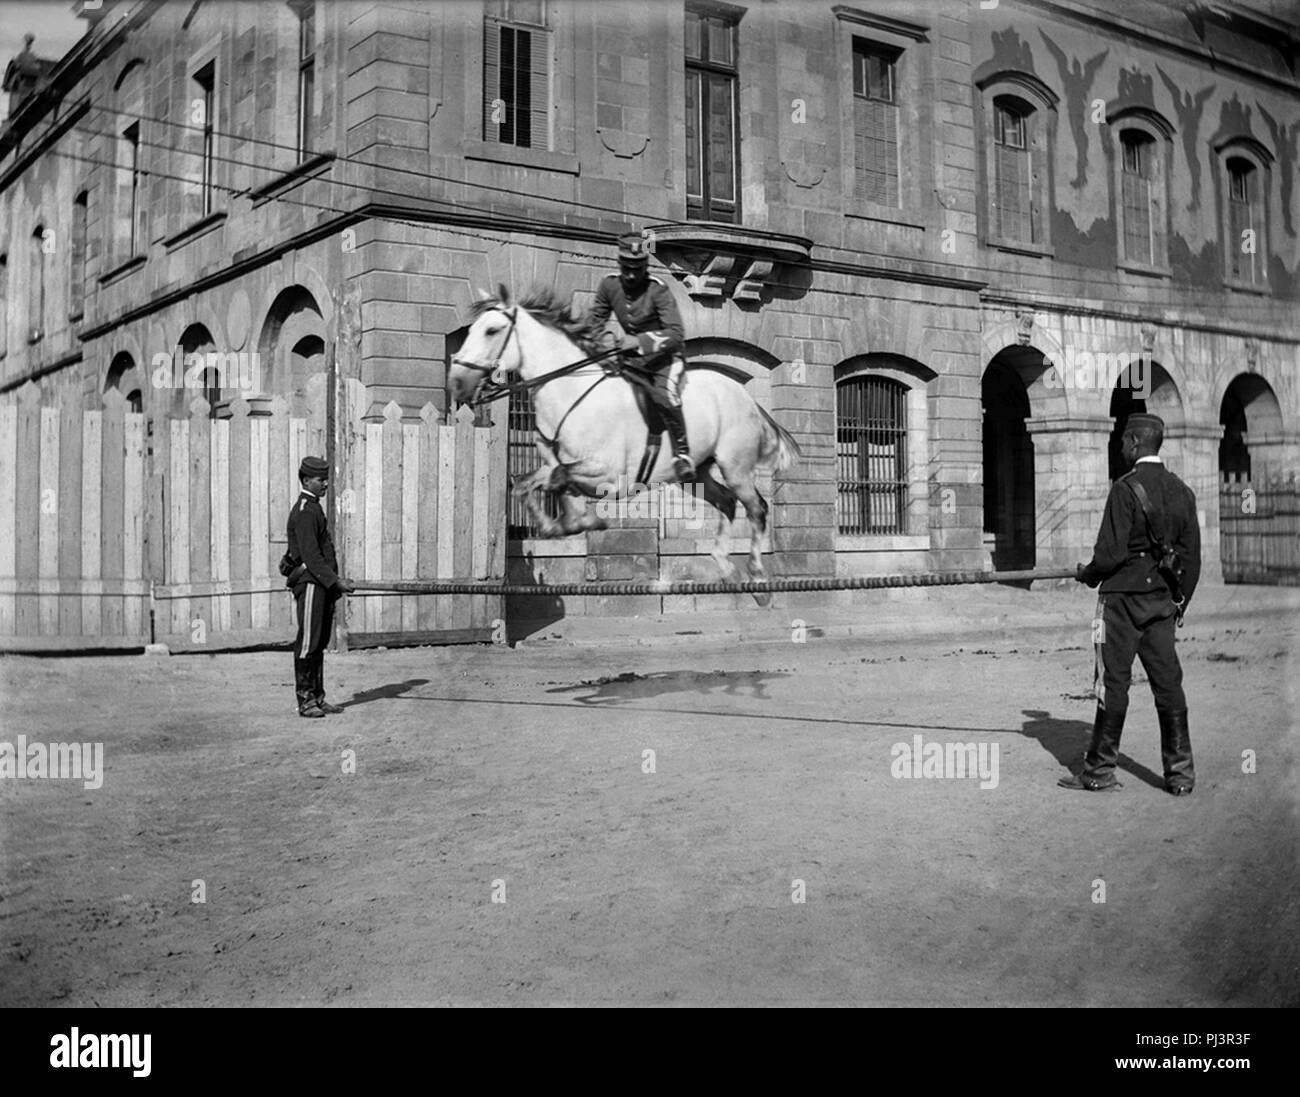 Baldomer Gili Roig. Stimmt Hípic Internacional de Barcelona (Pati d ‥ 99 Armes de la Ciutadella), 1905 - 1910. Stockfoto